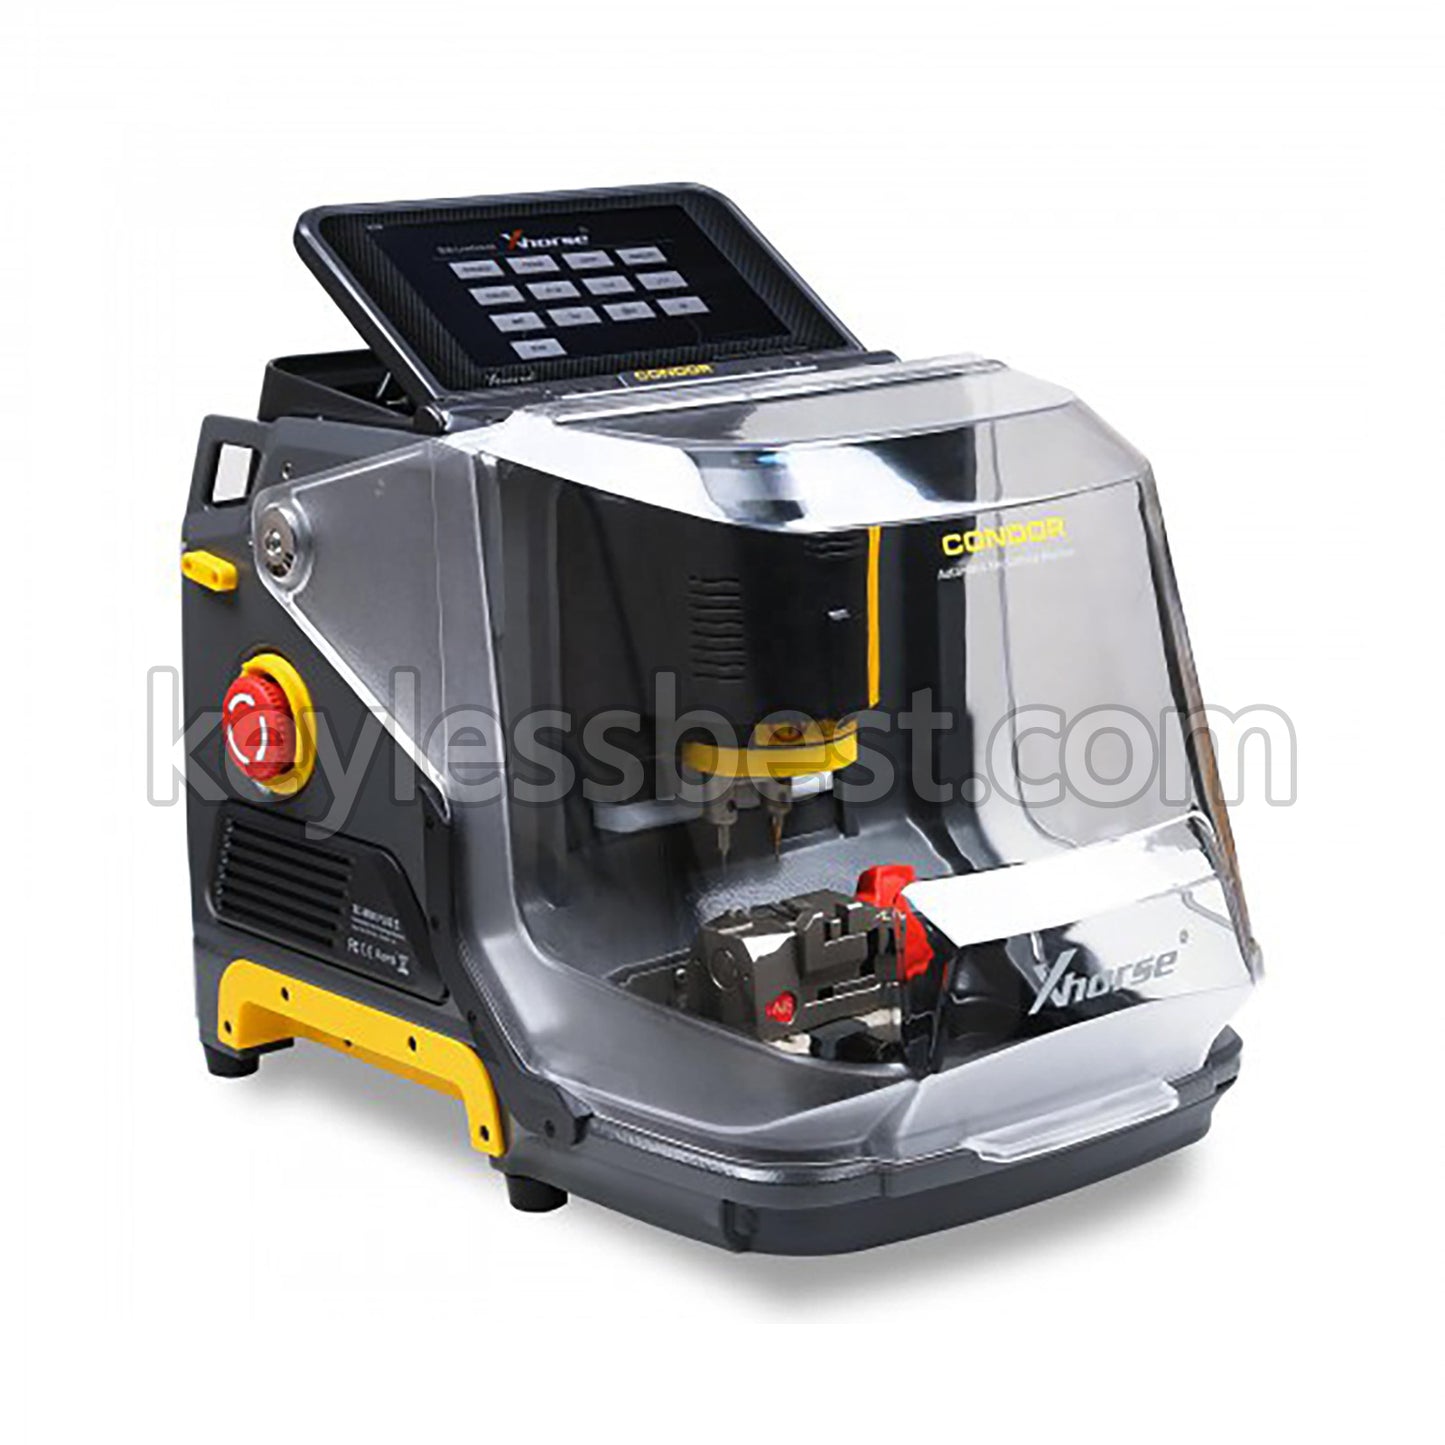 Xhorse Condor XC-MINI Plus II Key Cutting Machine Support Car/Motorbike/House Keys